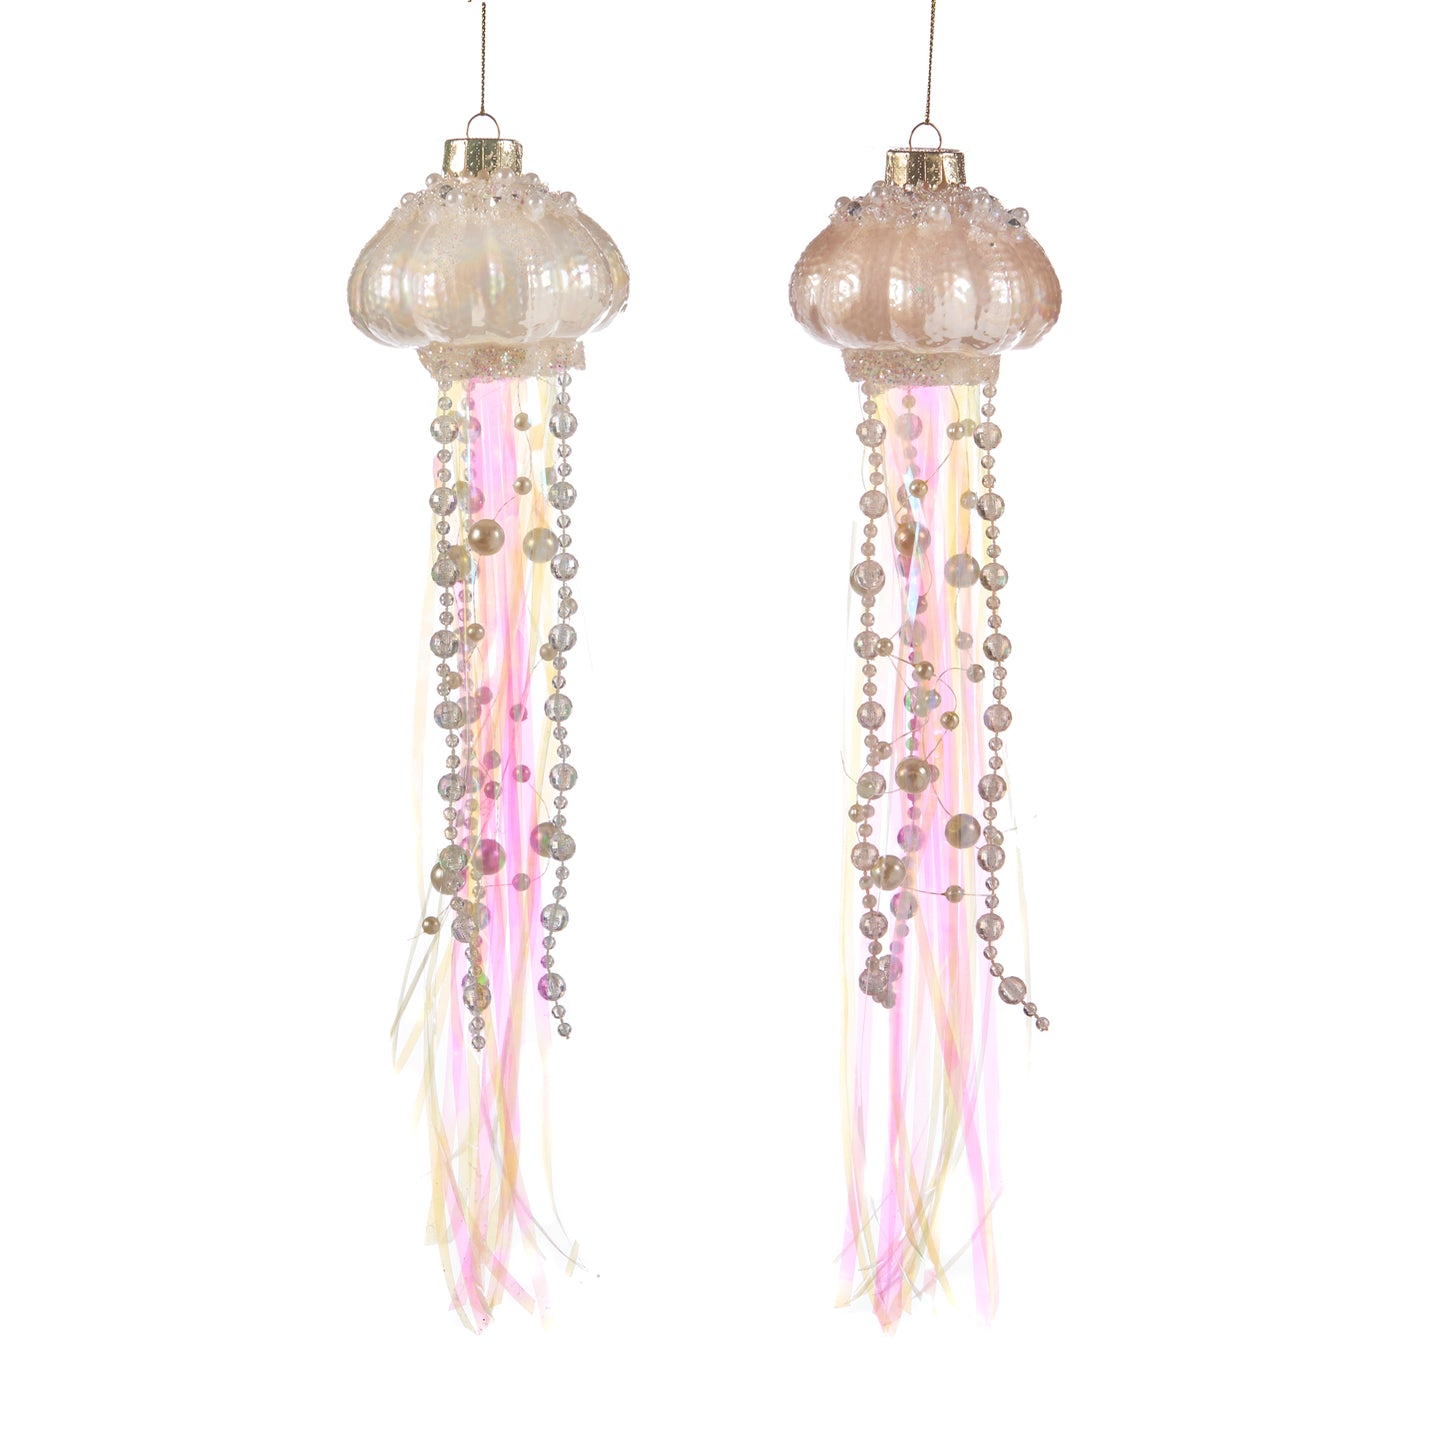 Goodwill Glass Tinsel Jellyfish Ornament Cream/Pink 13Cm, Set Of 2, Assortment